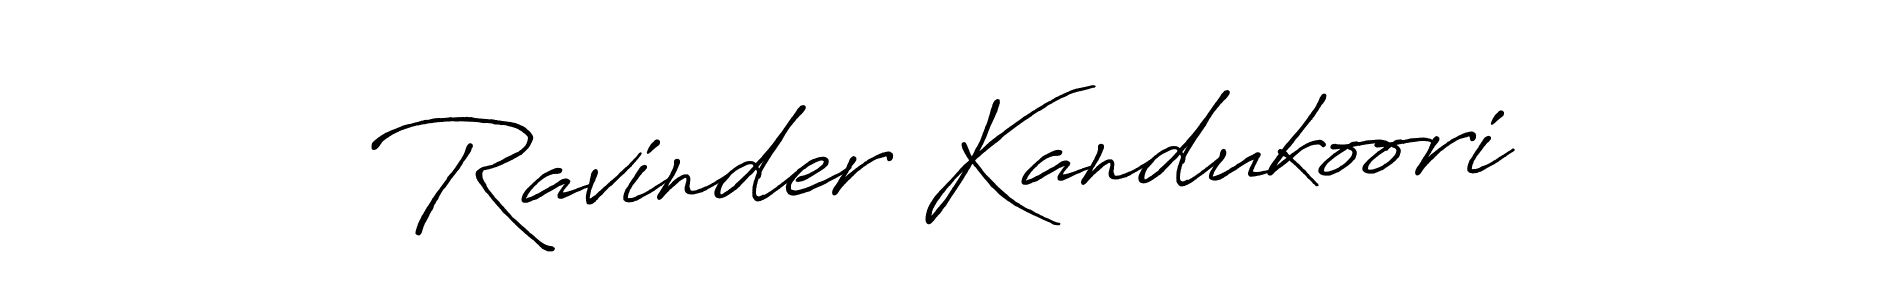 How to Draw Ravinder Kandukoori signature style? Antro_Vectra_Bolder is a latest design signature styles for name Ravinder Kandukoori. Ravinder Kandukoori signature style 7 images and pictures png